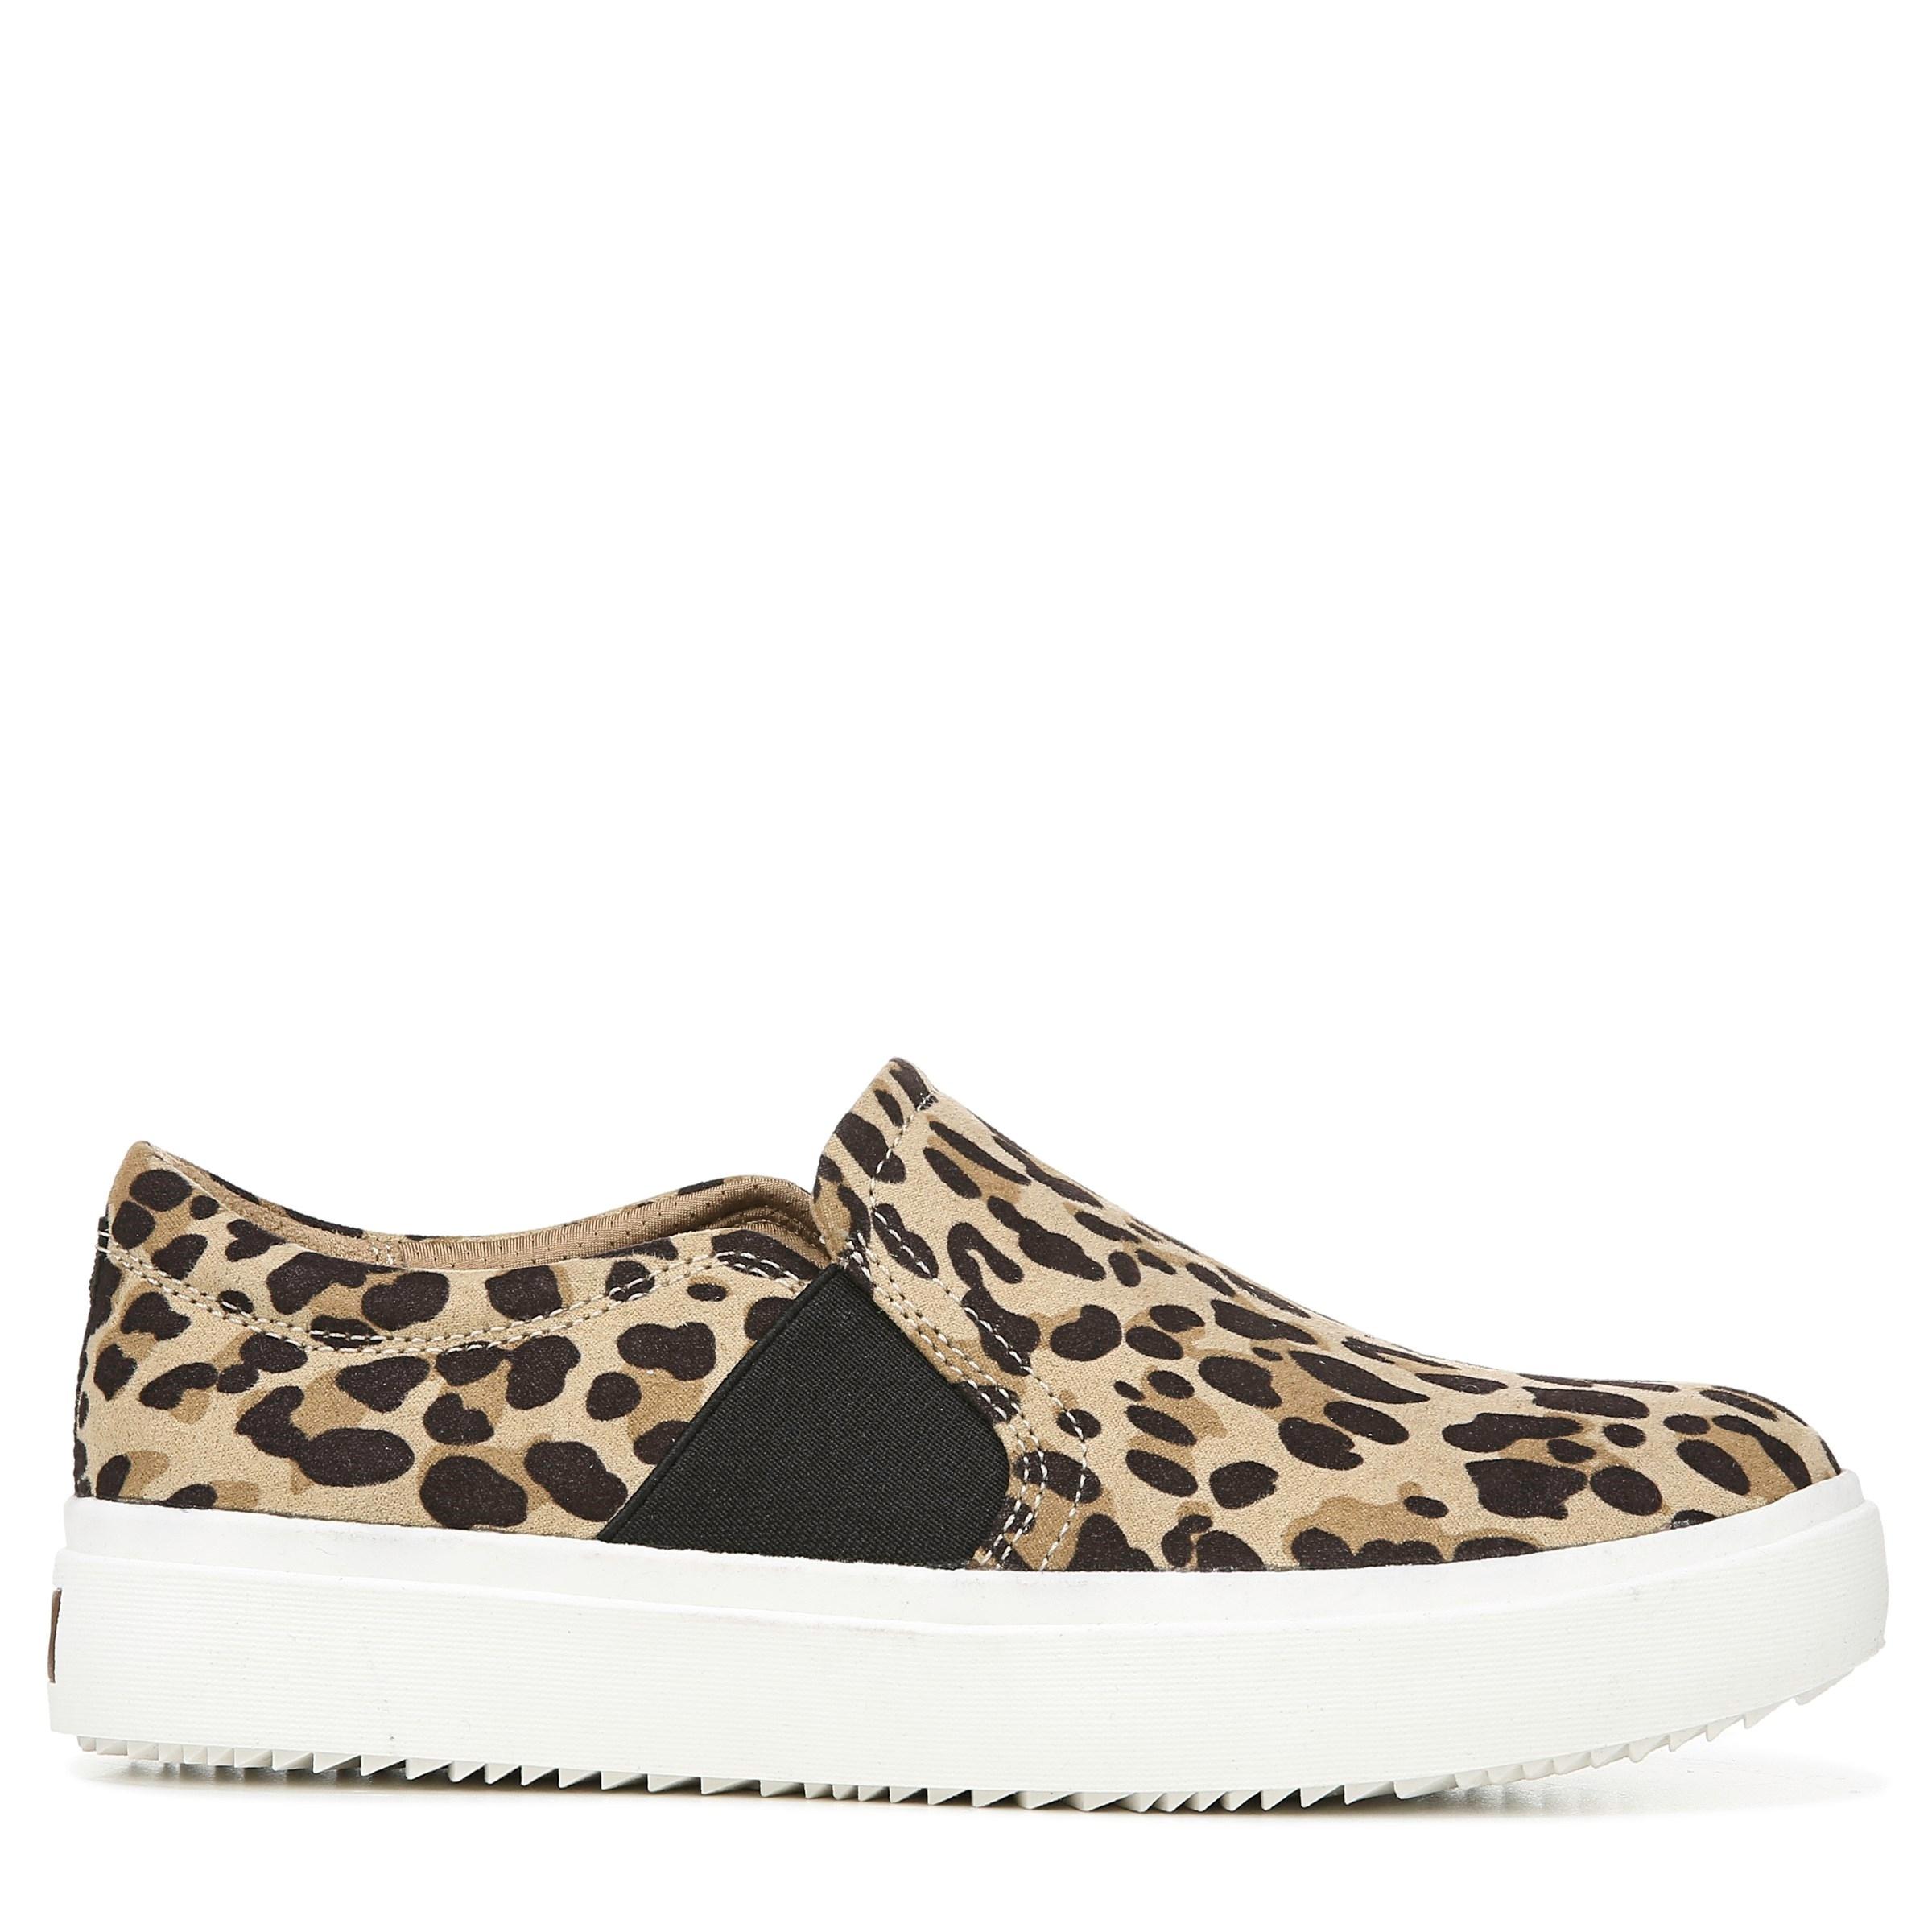 Dr. Scholls Wander Up Slip-on Sneaker in Black/Tan Leopard Print (Brown ...